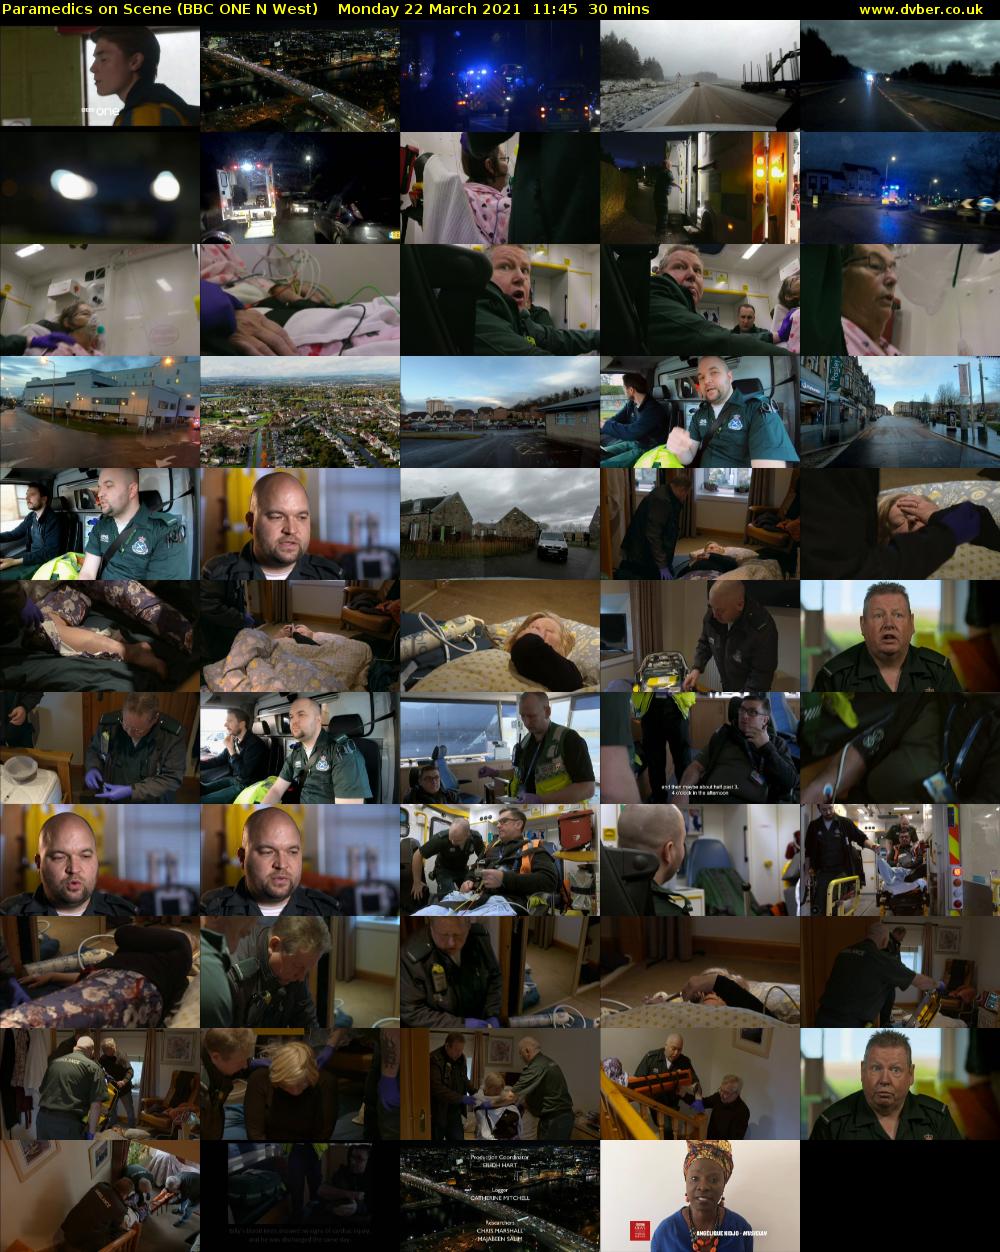 Paramedics on Scene (BBC ONE N West) Monday 22 March 2021 11:45 - 12:15